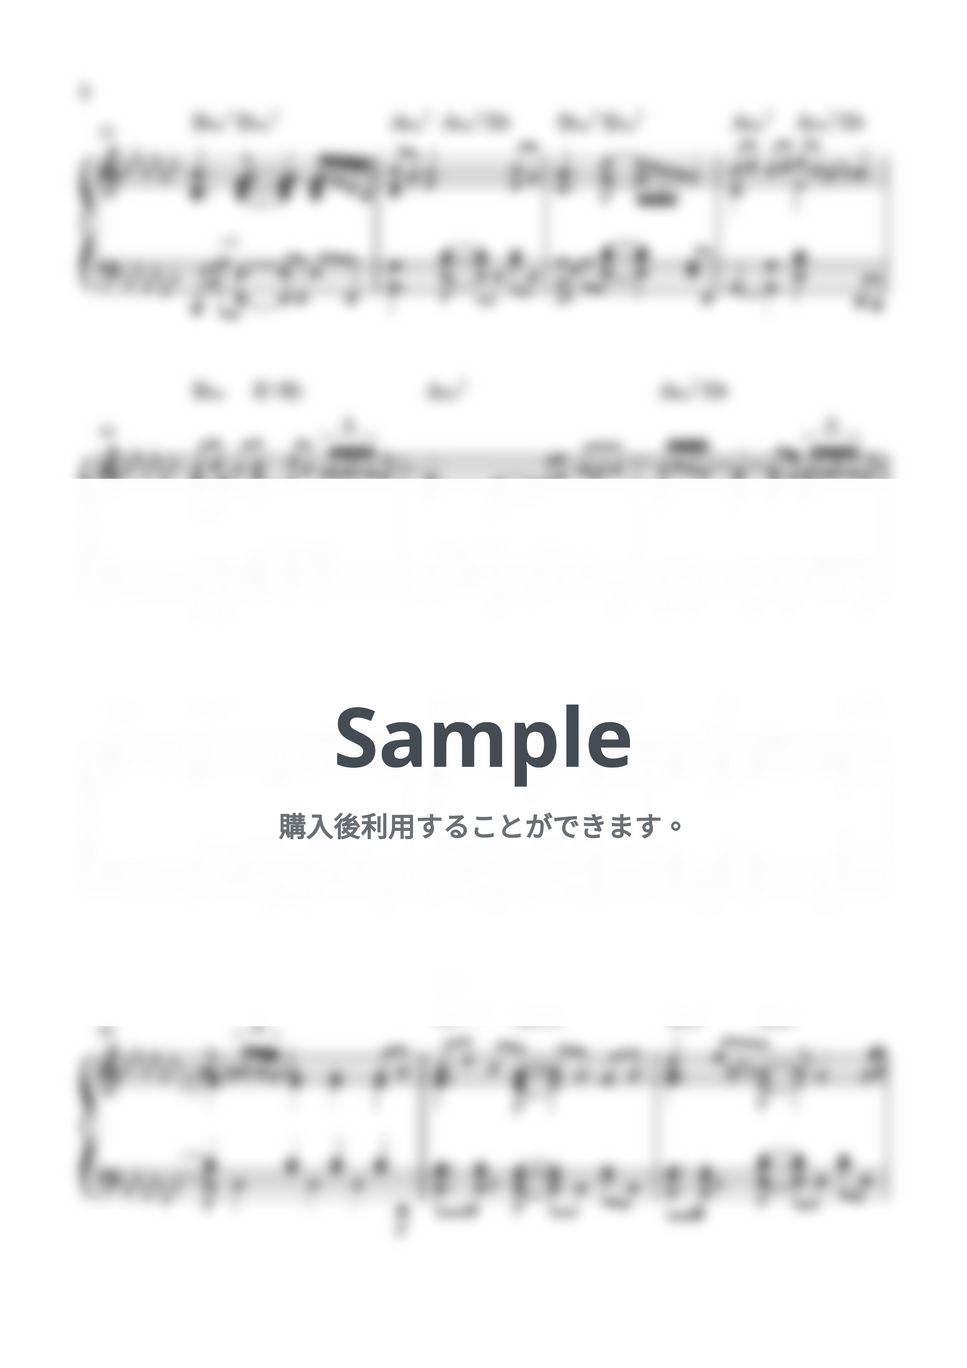 NONT TANONT - Melt (Fujii Kaze cover ver.) by miiの楽譜棚